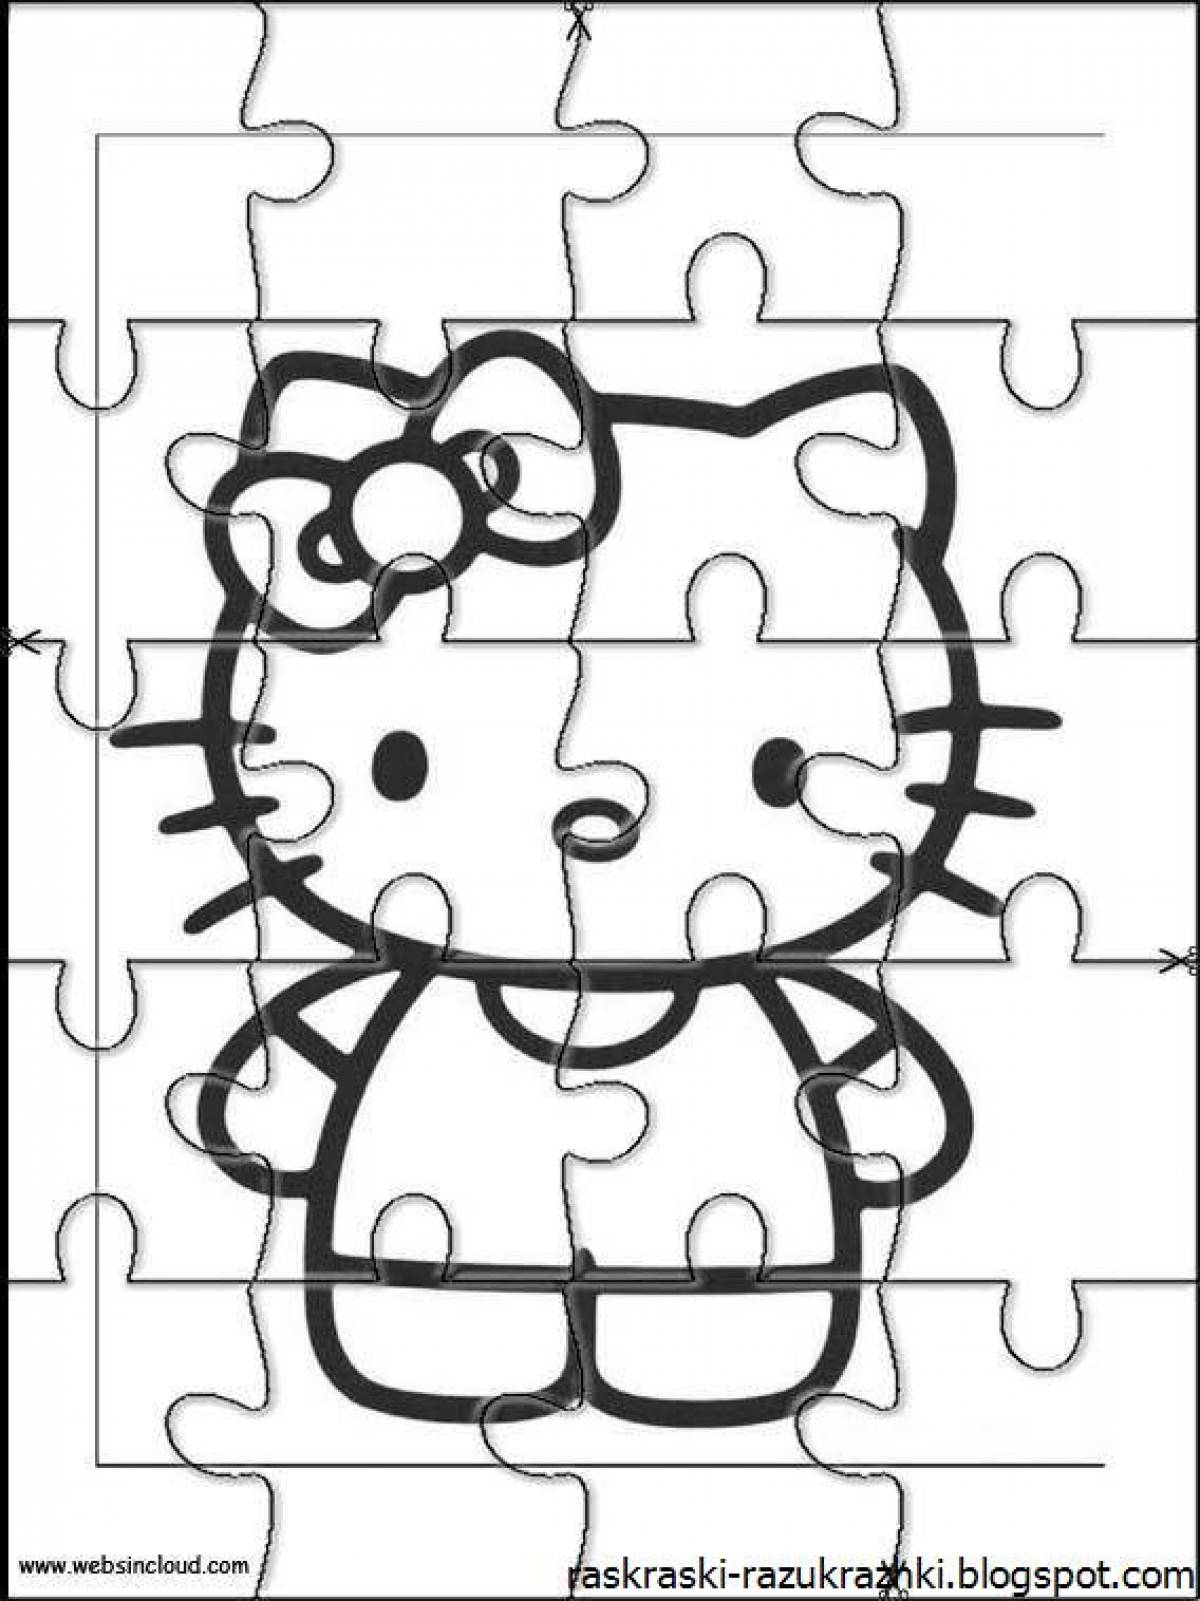 Fun puzzle coloring book